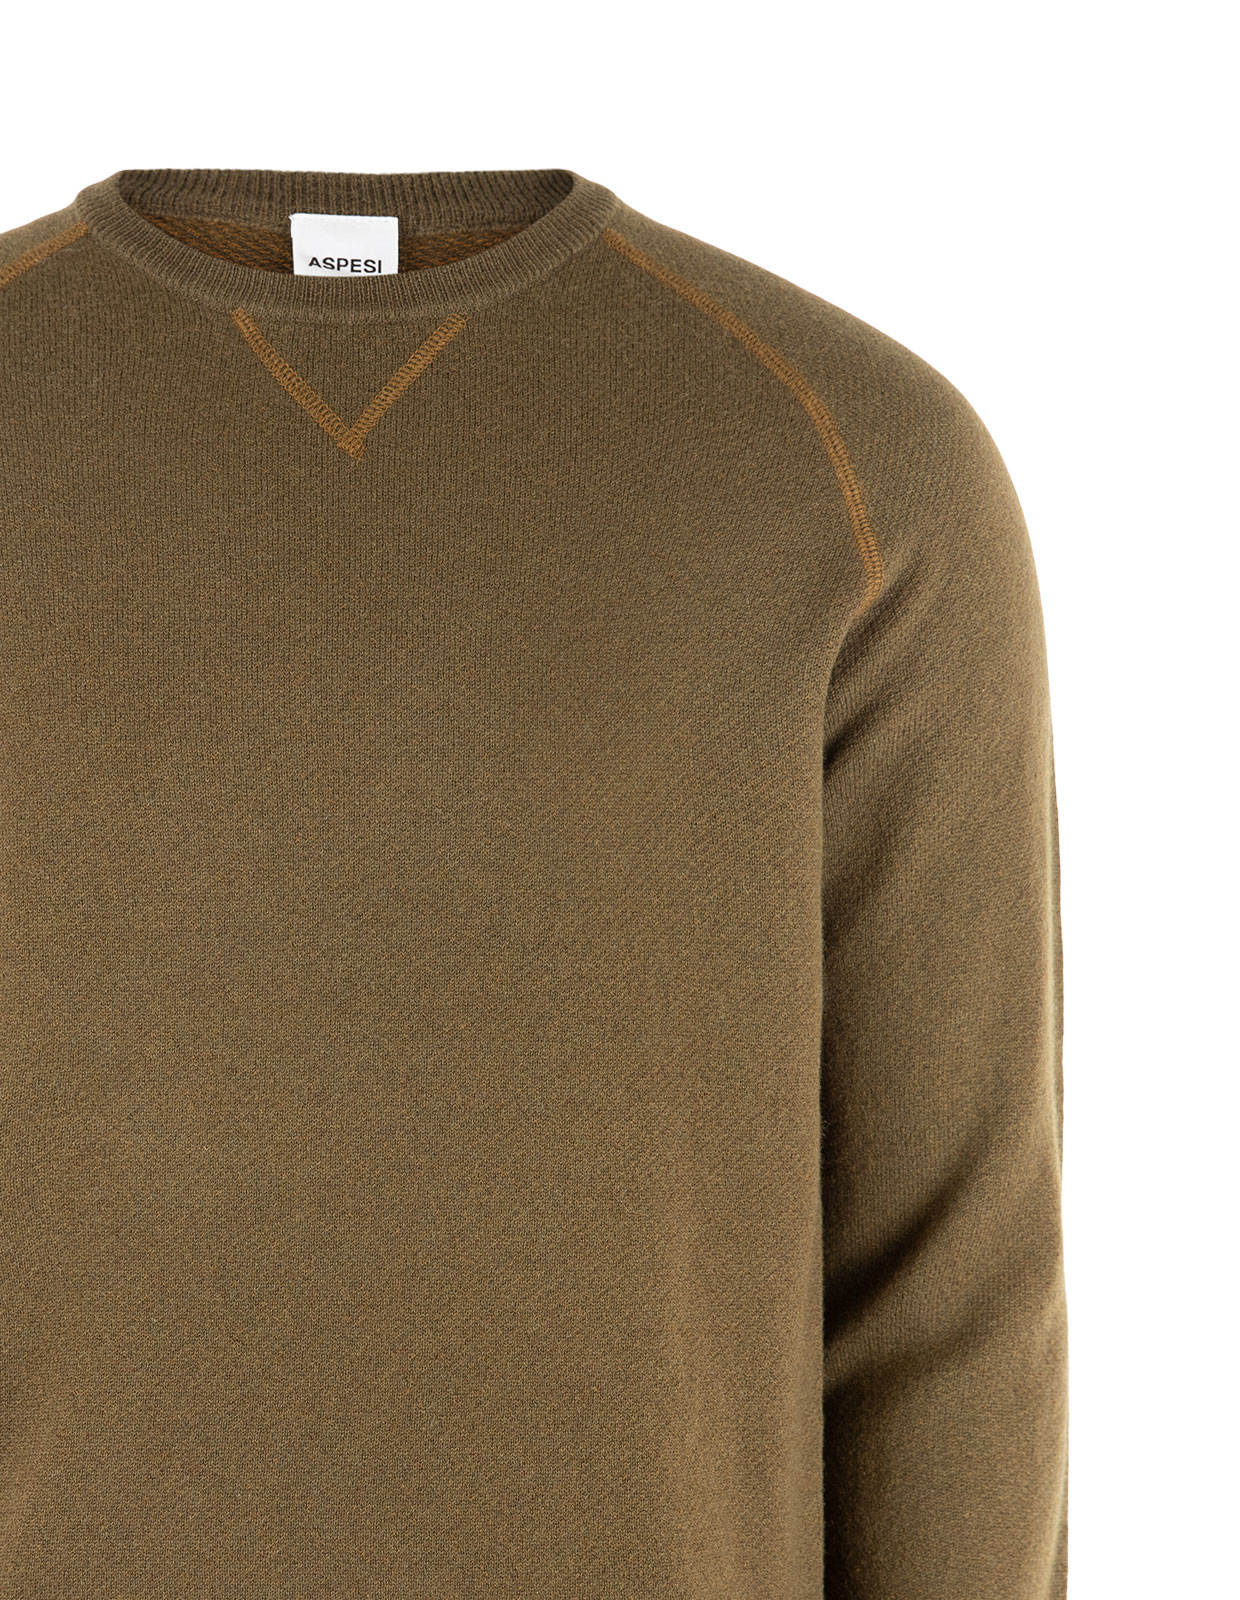 Crewneck Supergeelong Sweater Military Stl XL